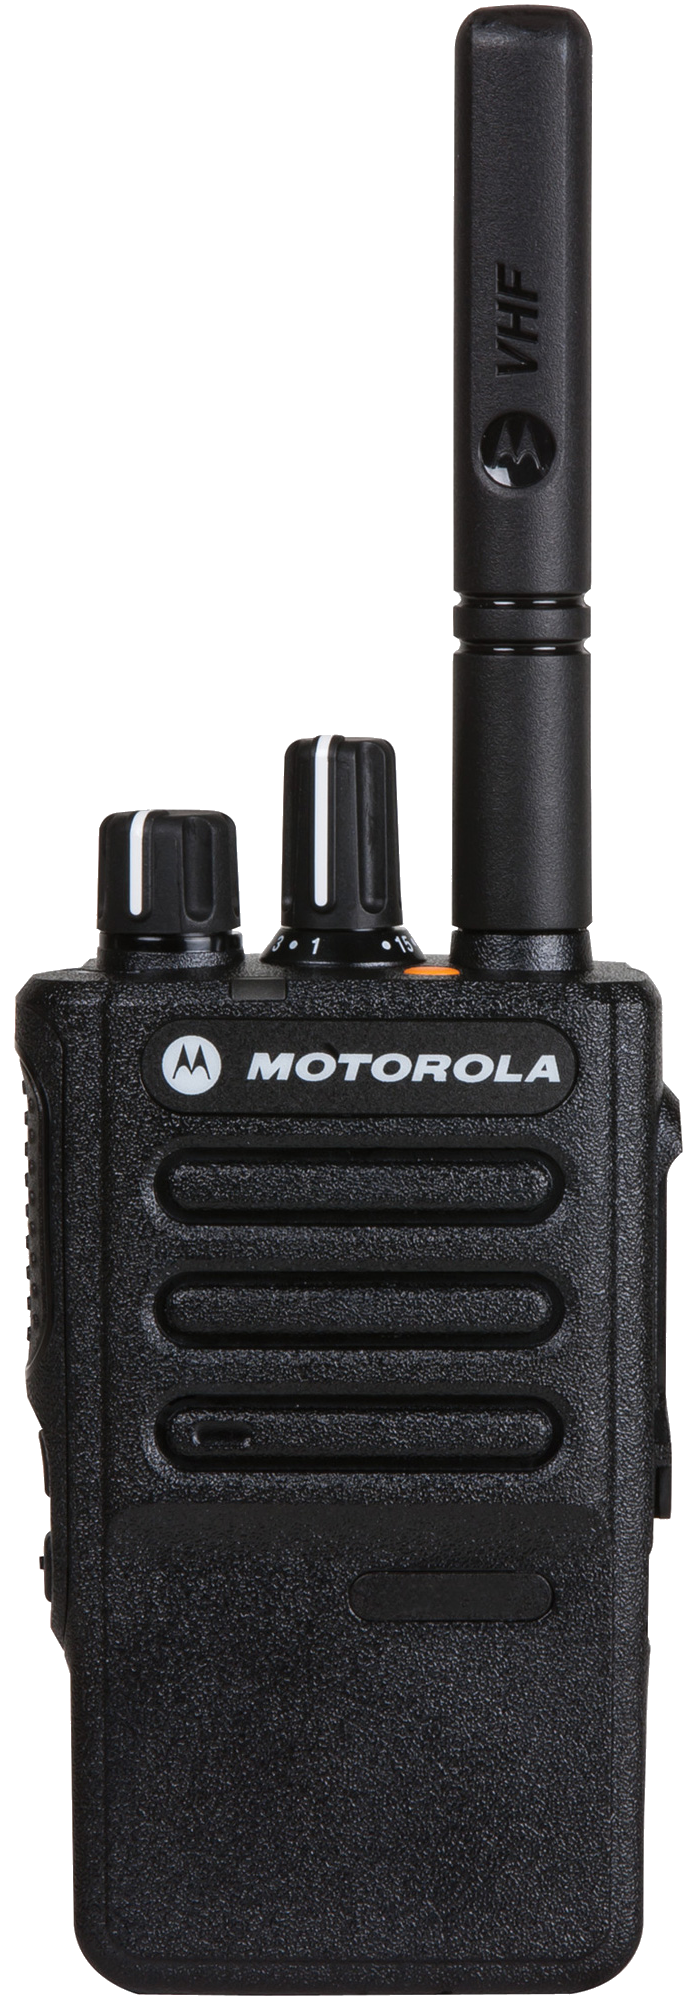 Motorola DP3441 Portable Radio